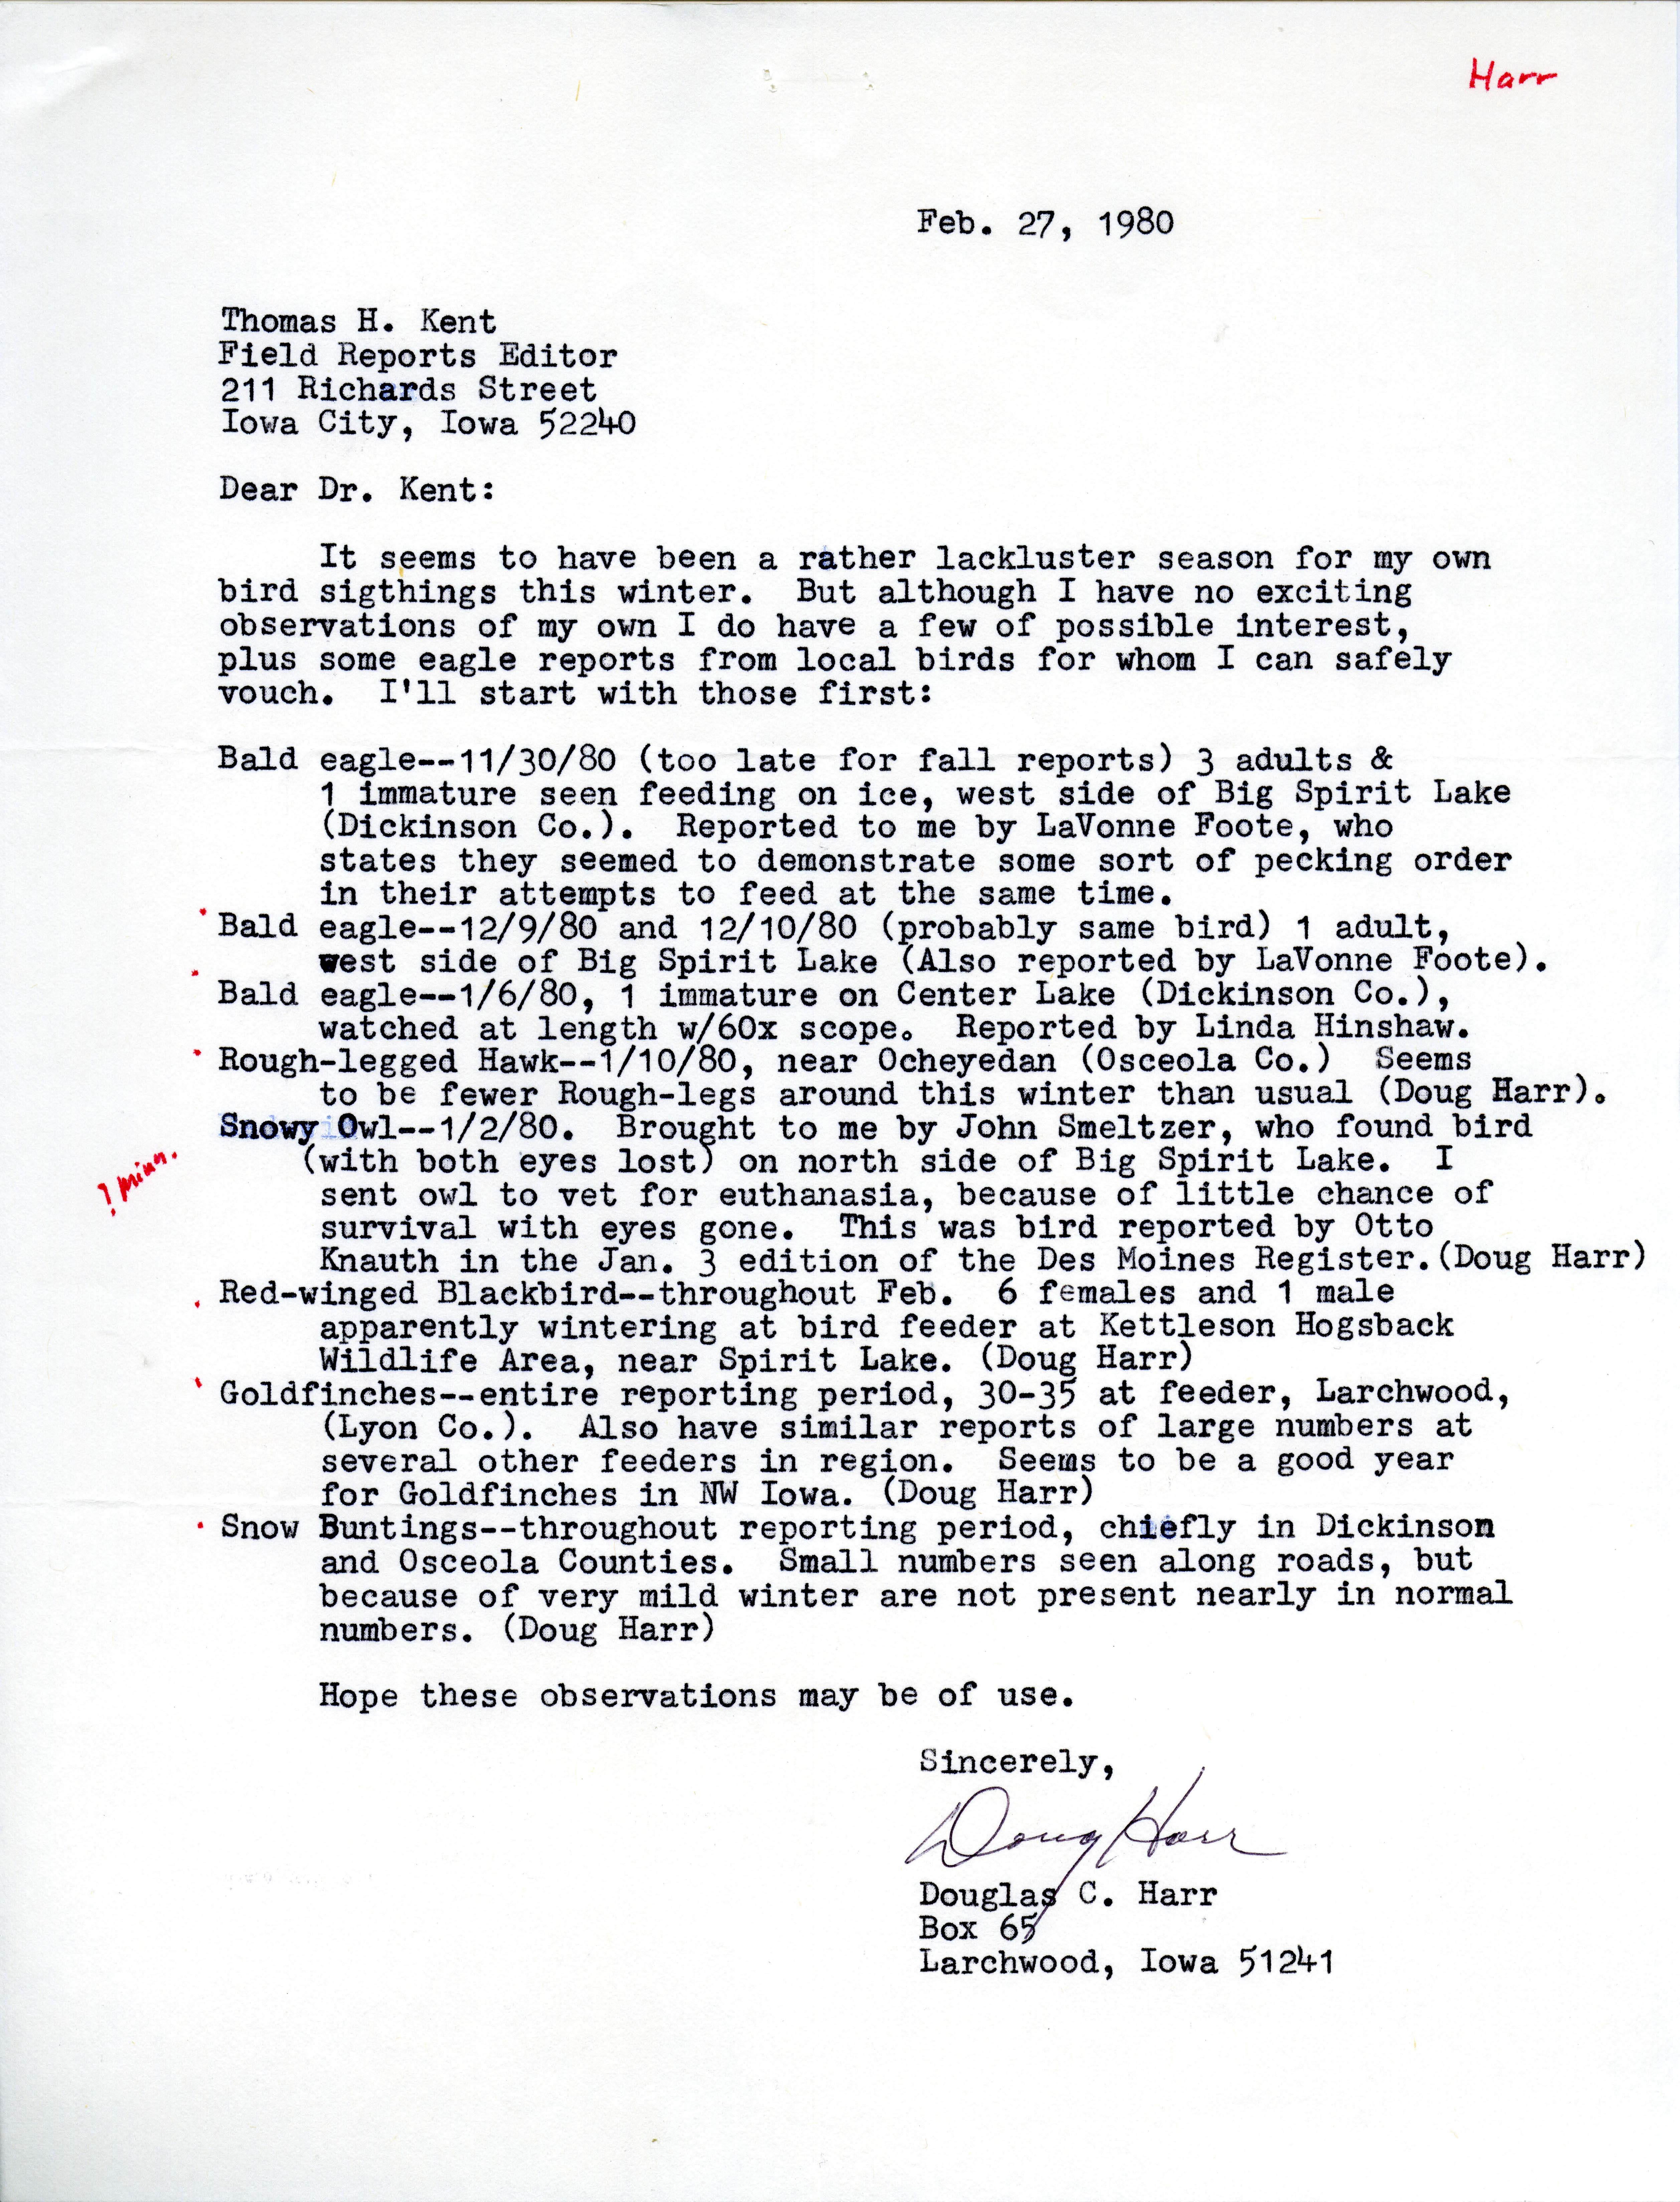 Douglas C. Harr letter to Thomas H. Kent regarding bird sightings, February 27, 1980